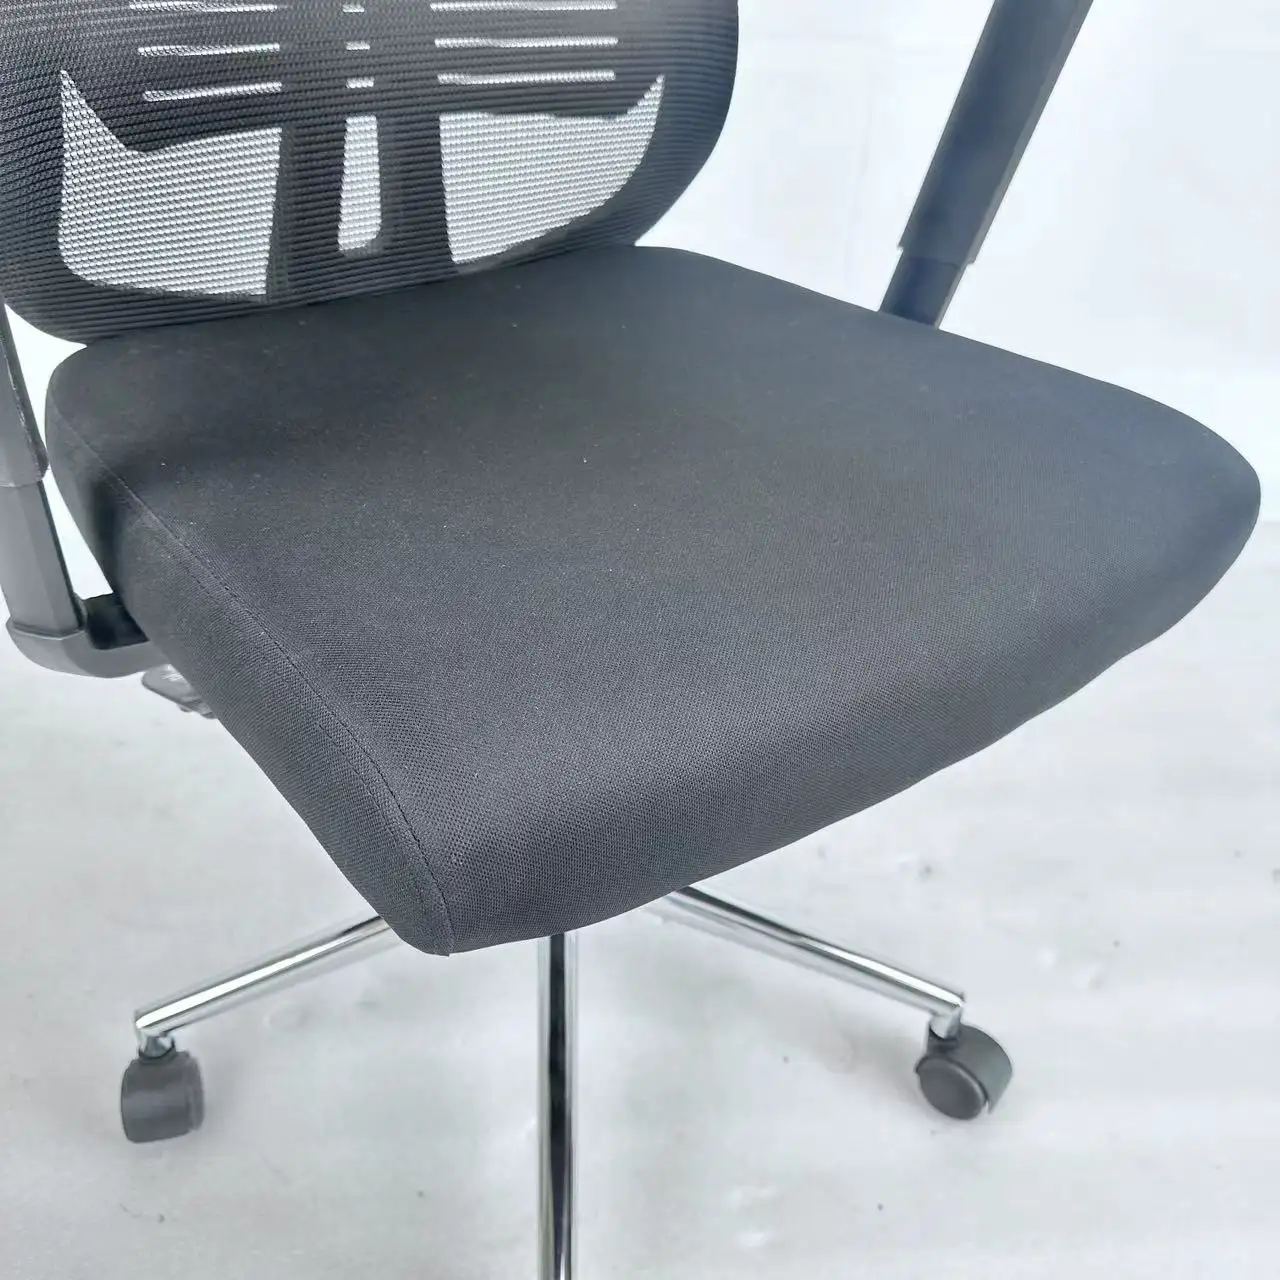 Muebles de oficina de alta calidad, silla de oficina de tela, silla ergonómica de malla giratoria ejecutiva para muebles de oficina